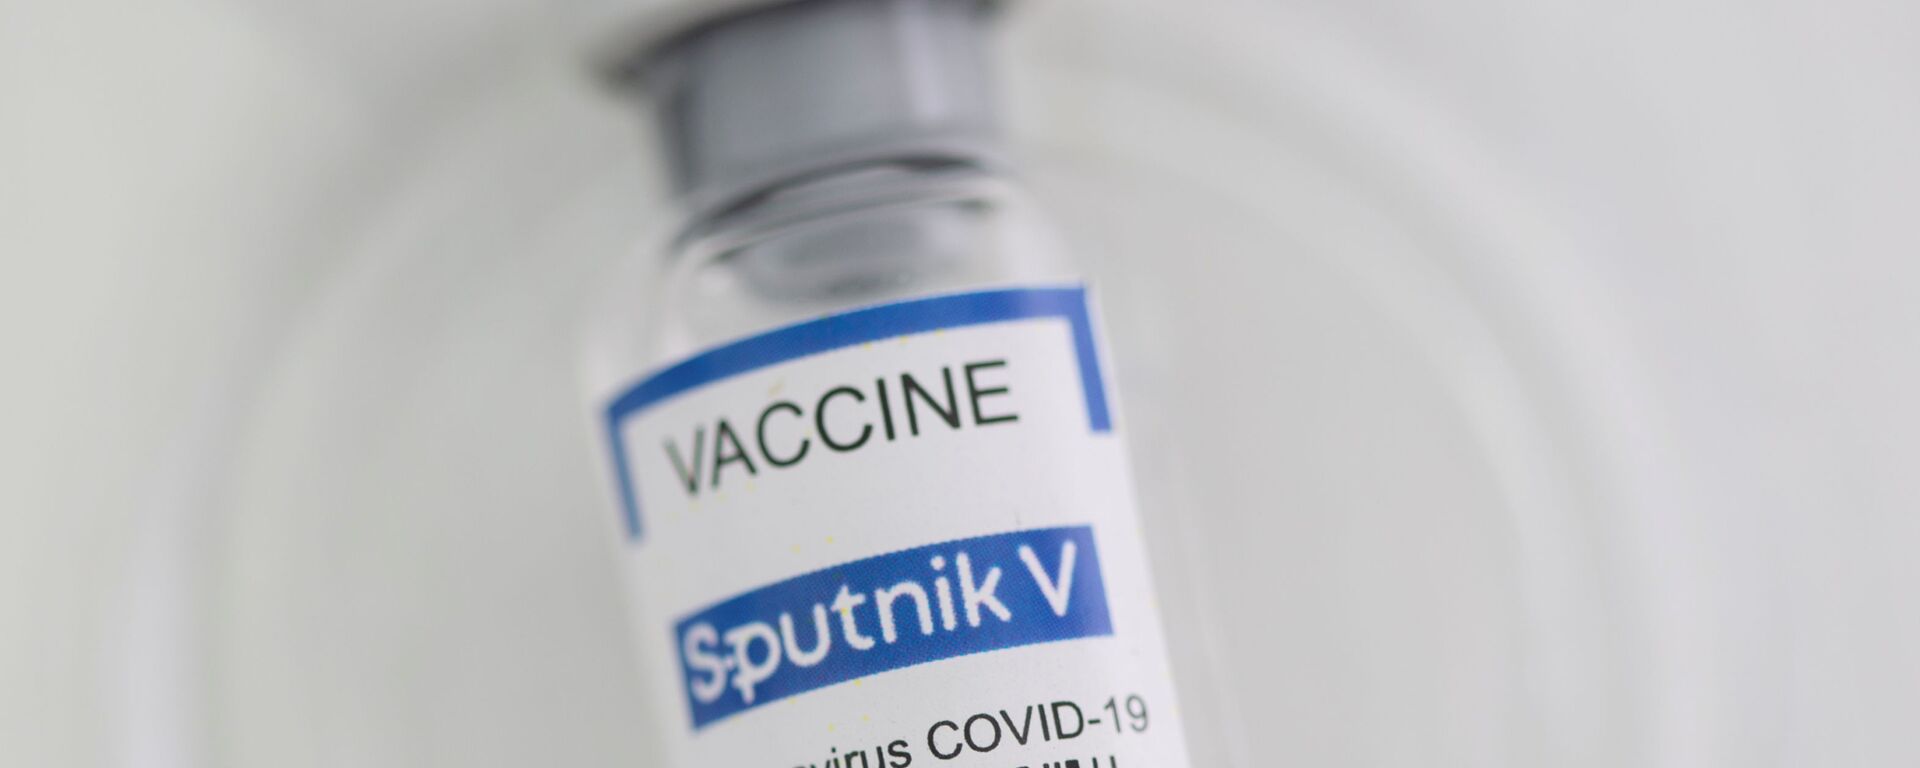 A vial labelled Sputnik V coronavirus disease (COVID-19) vaccine is seen in this illustration picture taken on 2 May 2021. - Sputnik International, 1920, 17.12.2021